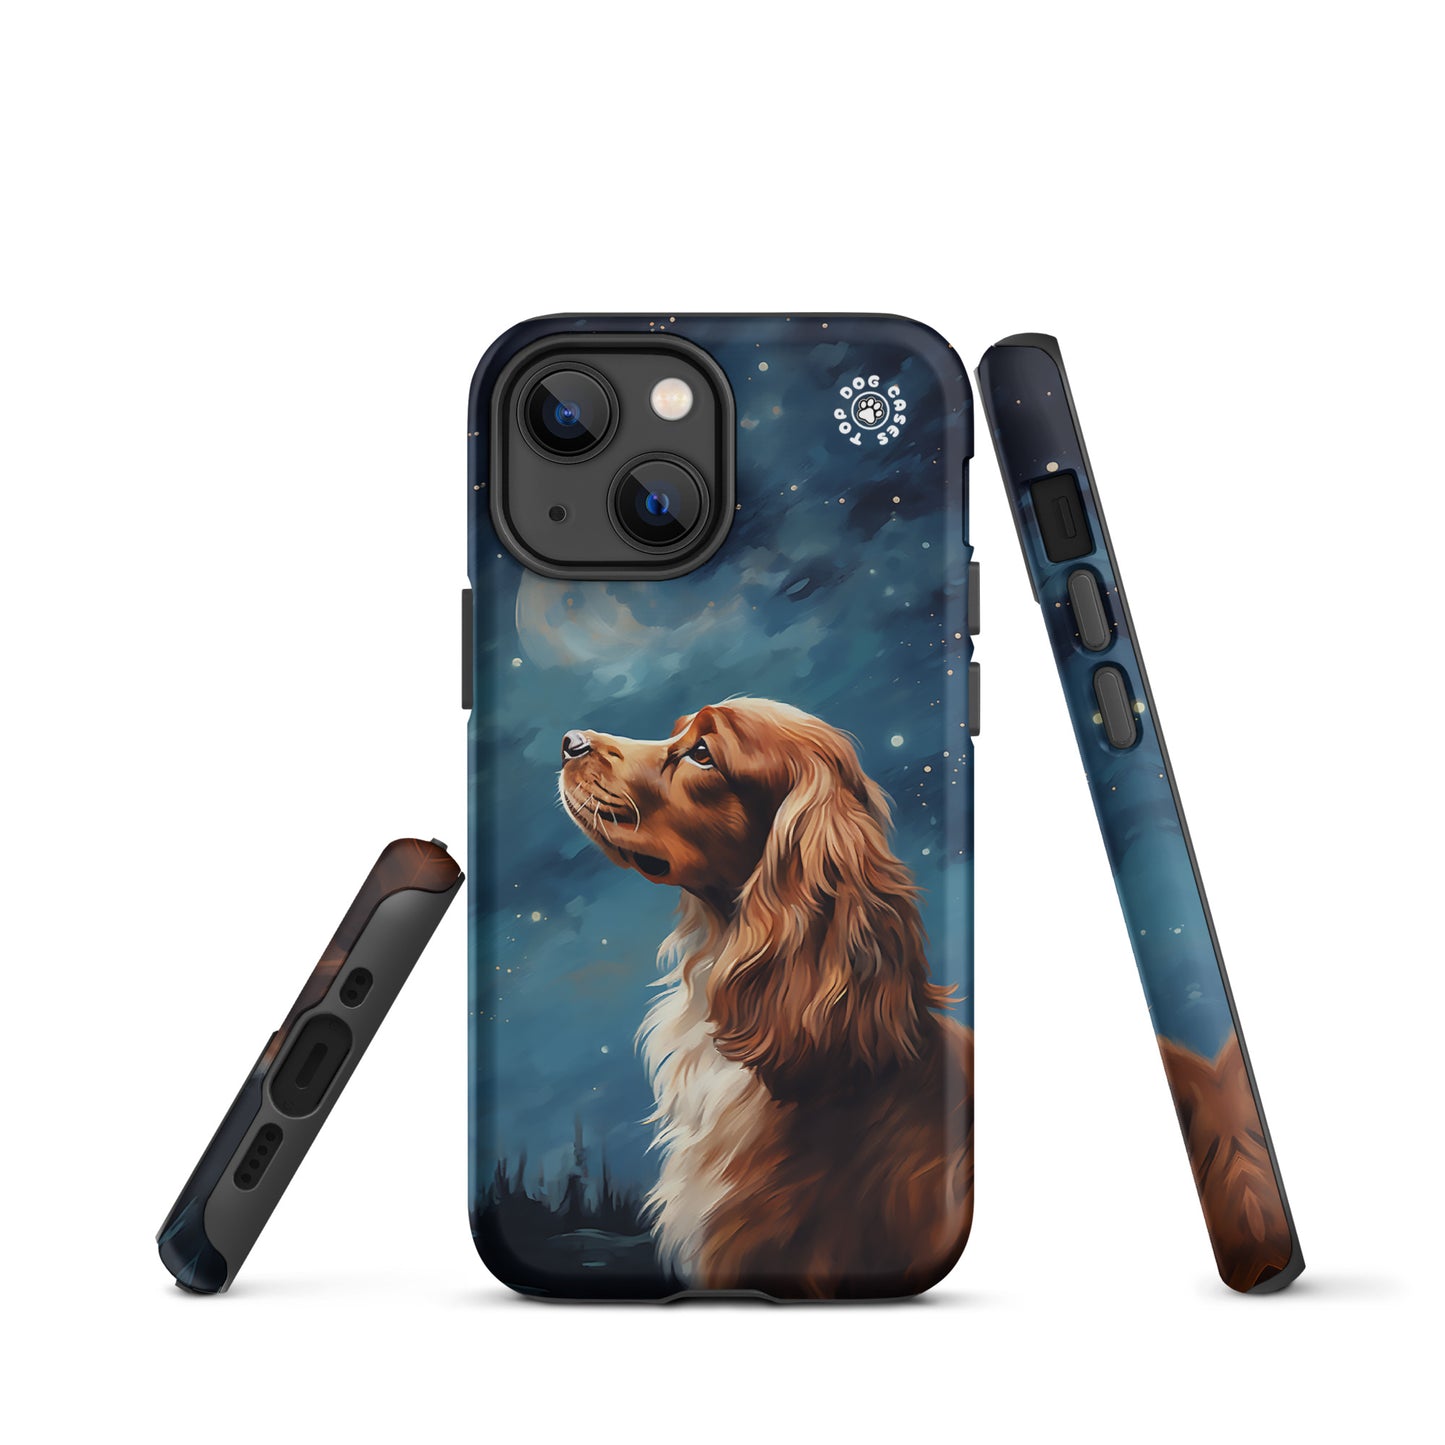 Cocker Spaniel - iPhone 13 Case - Cute Phone Cases - Top Dog Cases - #Cocker Spaniel, #CockerSpaniel, #CuteDog, #CuteDogs, #CutePhoneCases, #DogPhoneCase, #iPhone13, #iPhone13case, #iPhone13DogCase, #iPhone13Mini, #iPhone13Pro, #iPhone13ProMax